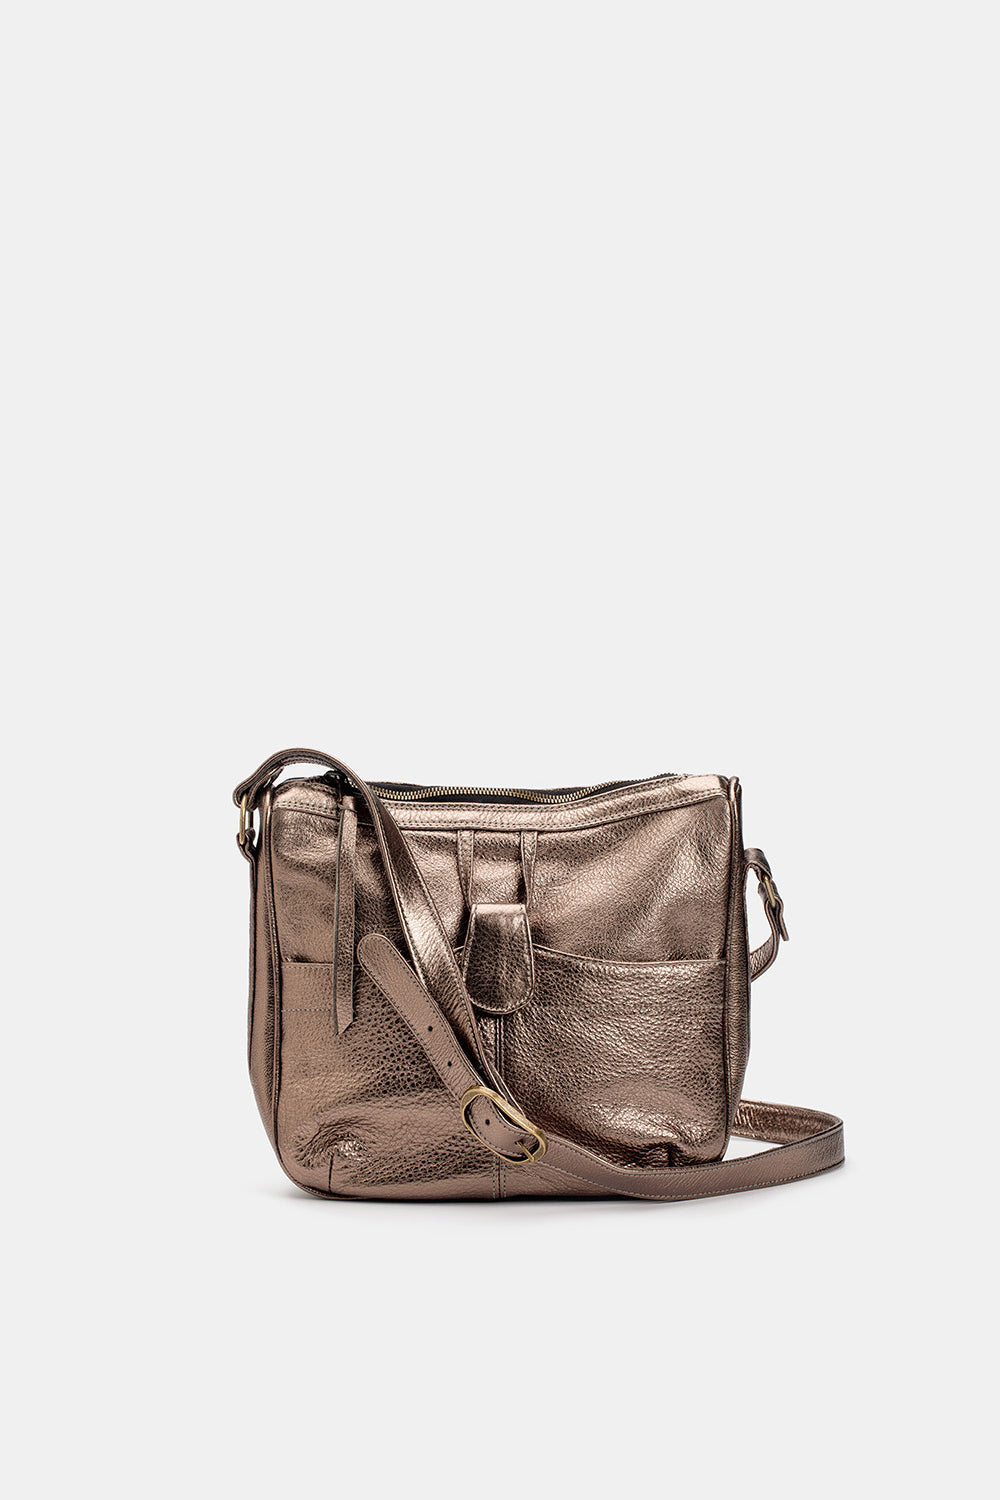 Twiggy Leather Shoulder Bag in Bronze